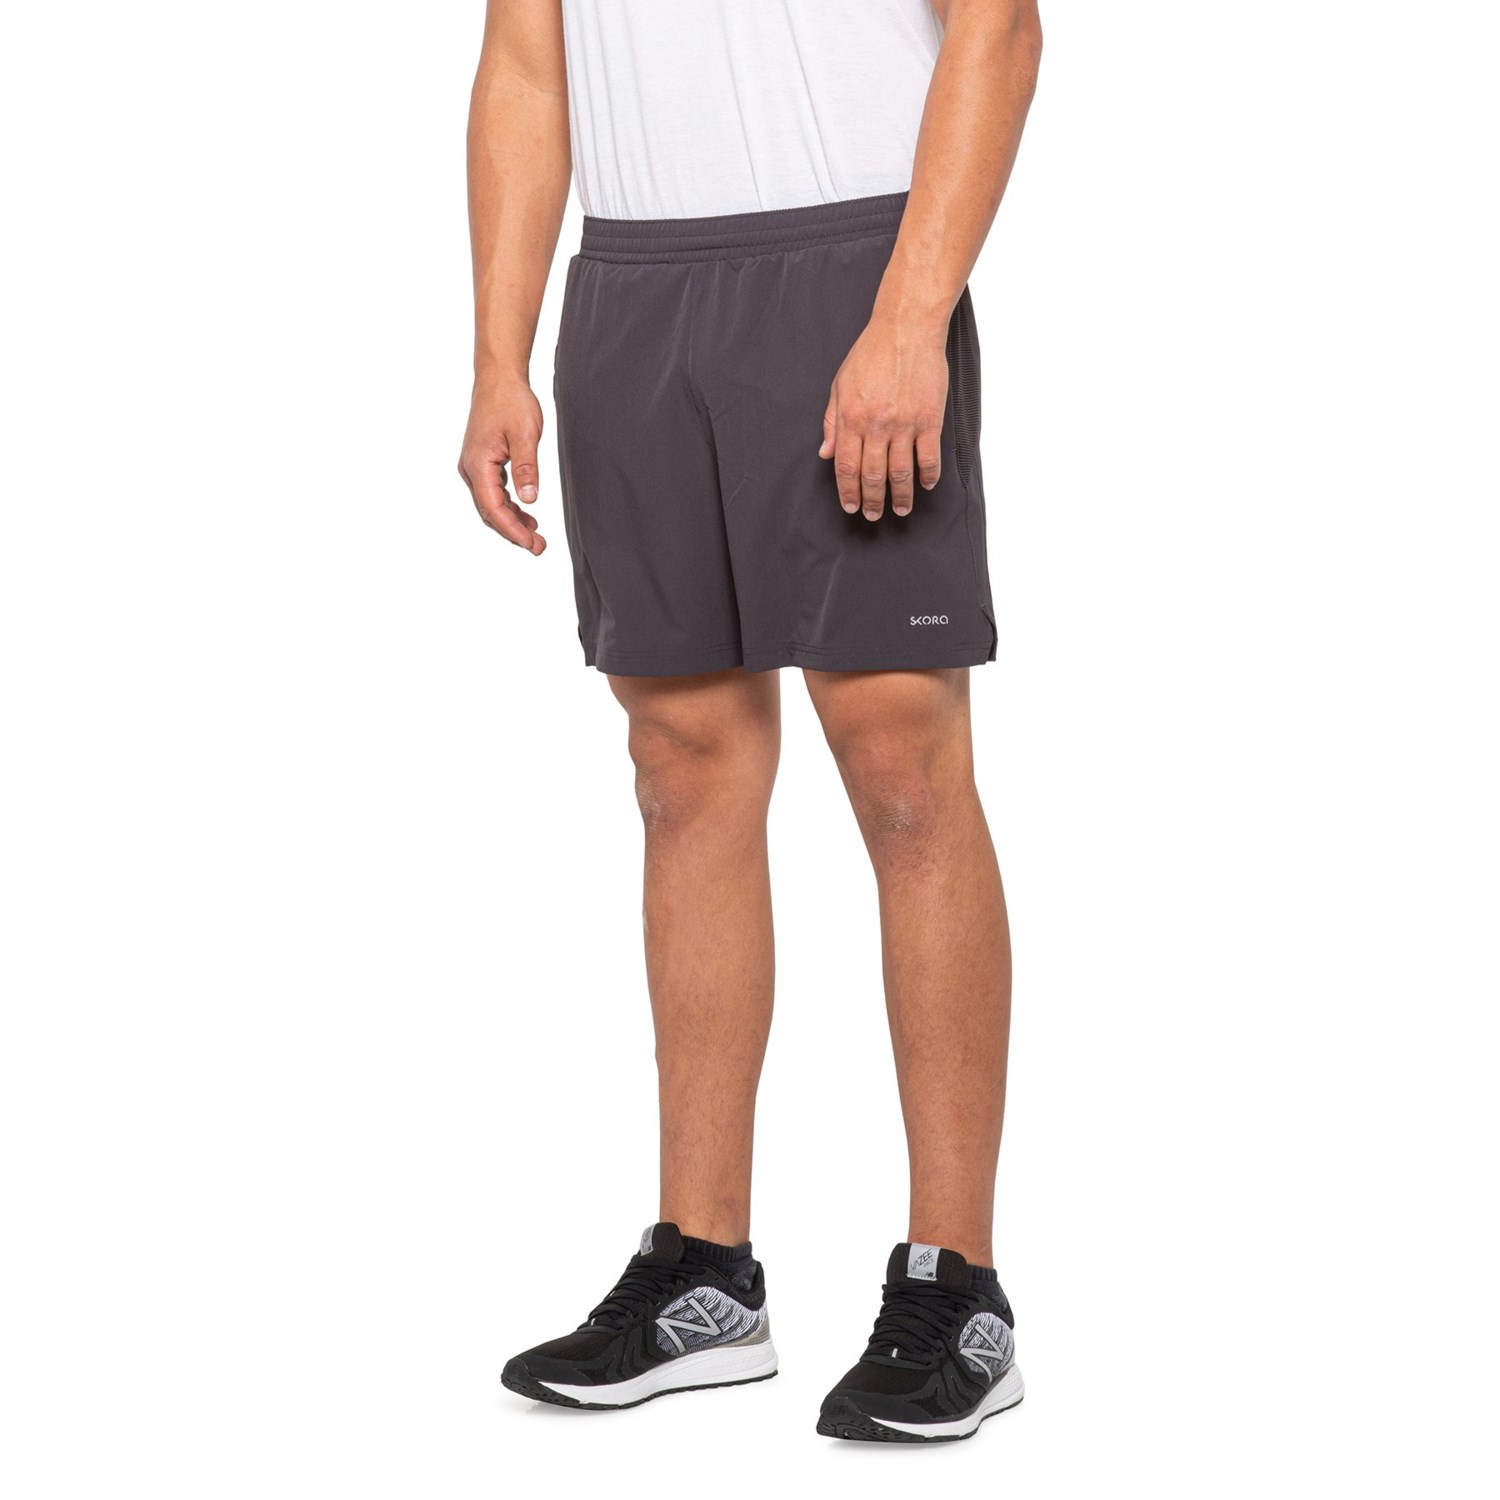 Skora Ultra Woven Running Shorts (For Men) - Save 25%